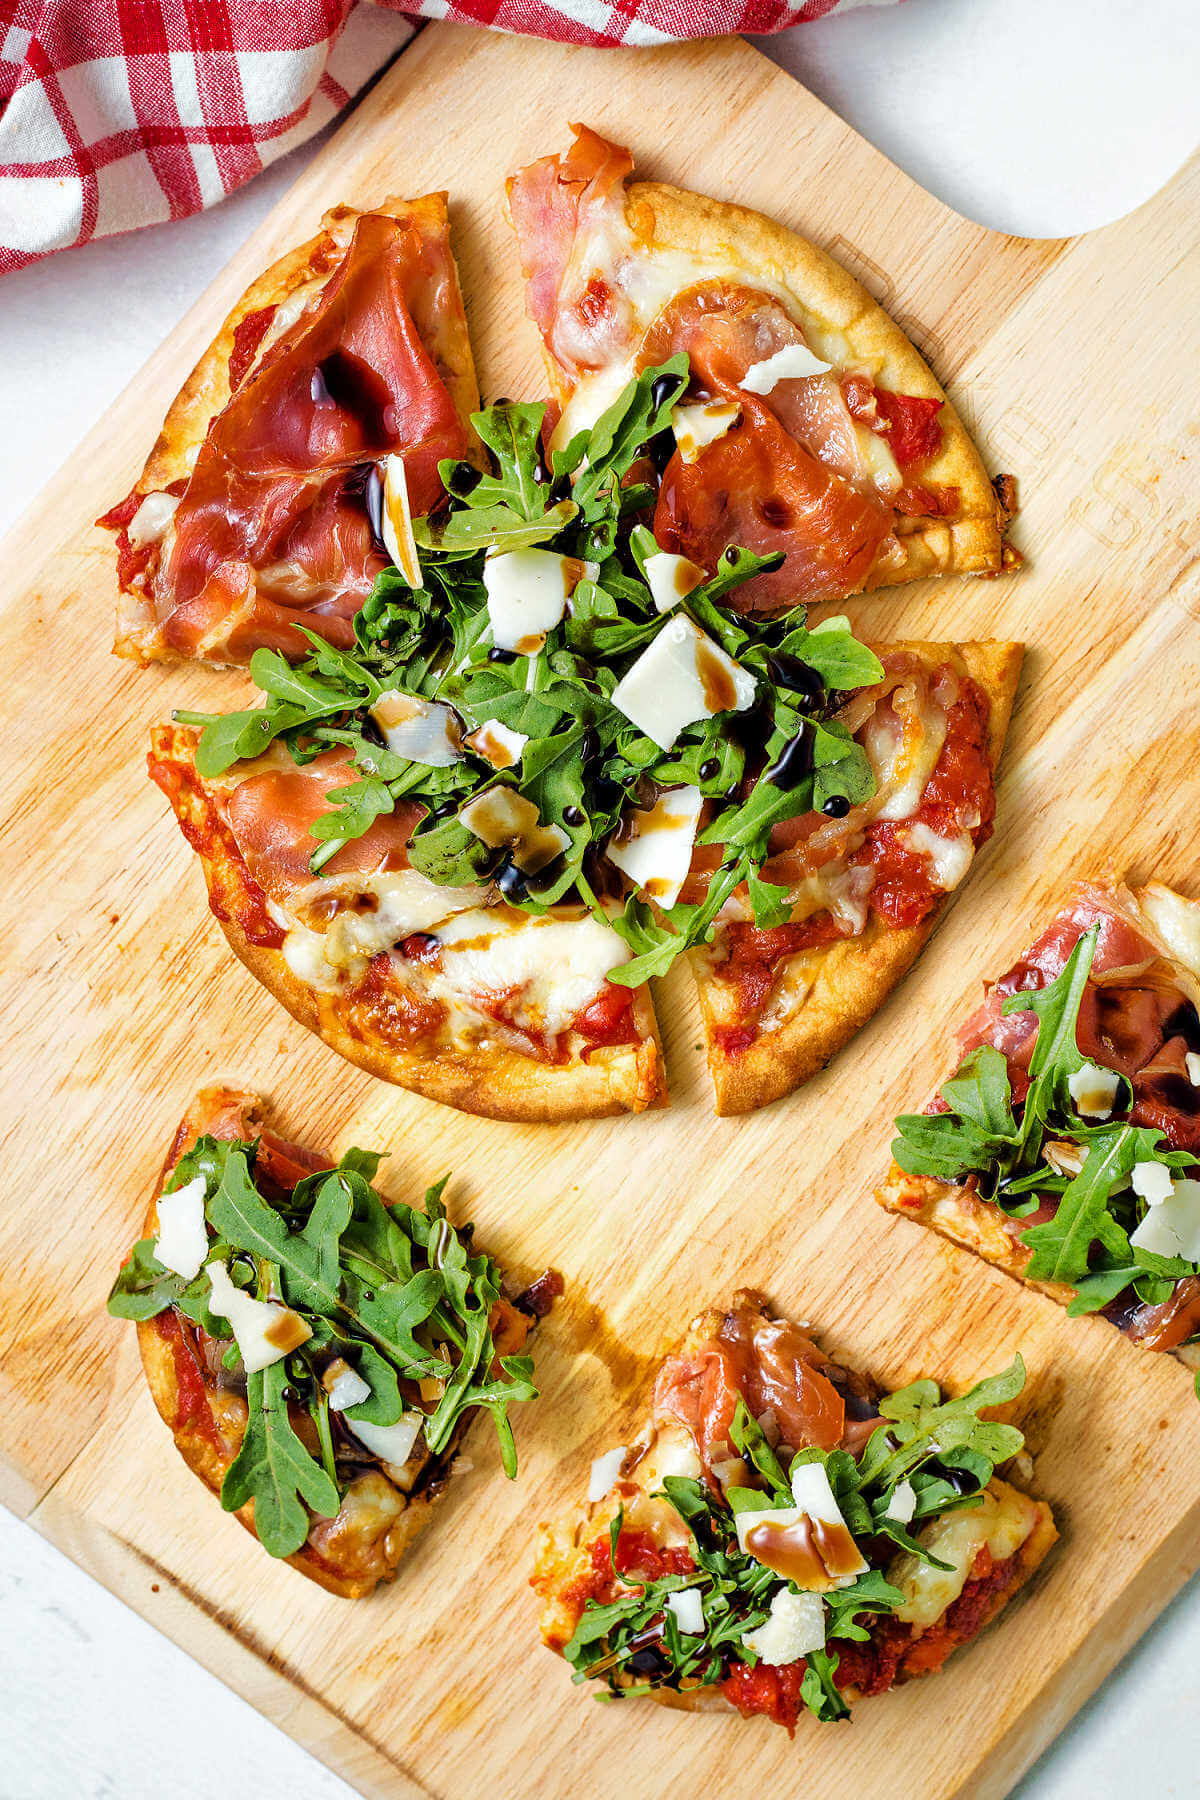 pita bread pizza with prosciutto, arugula, and balsamic vinegar drizzled on top cut into quarters on a pizza peel.